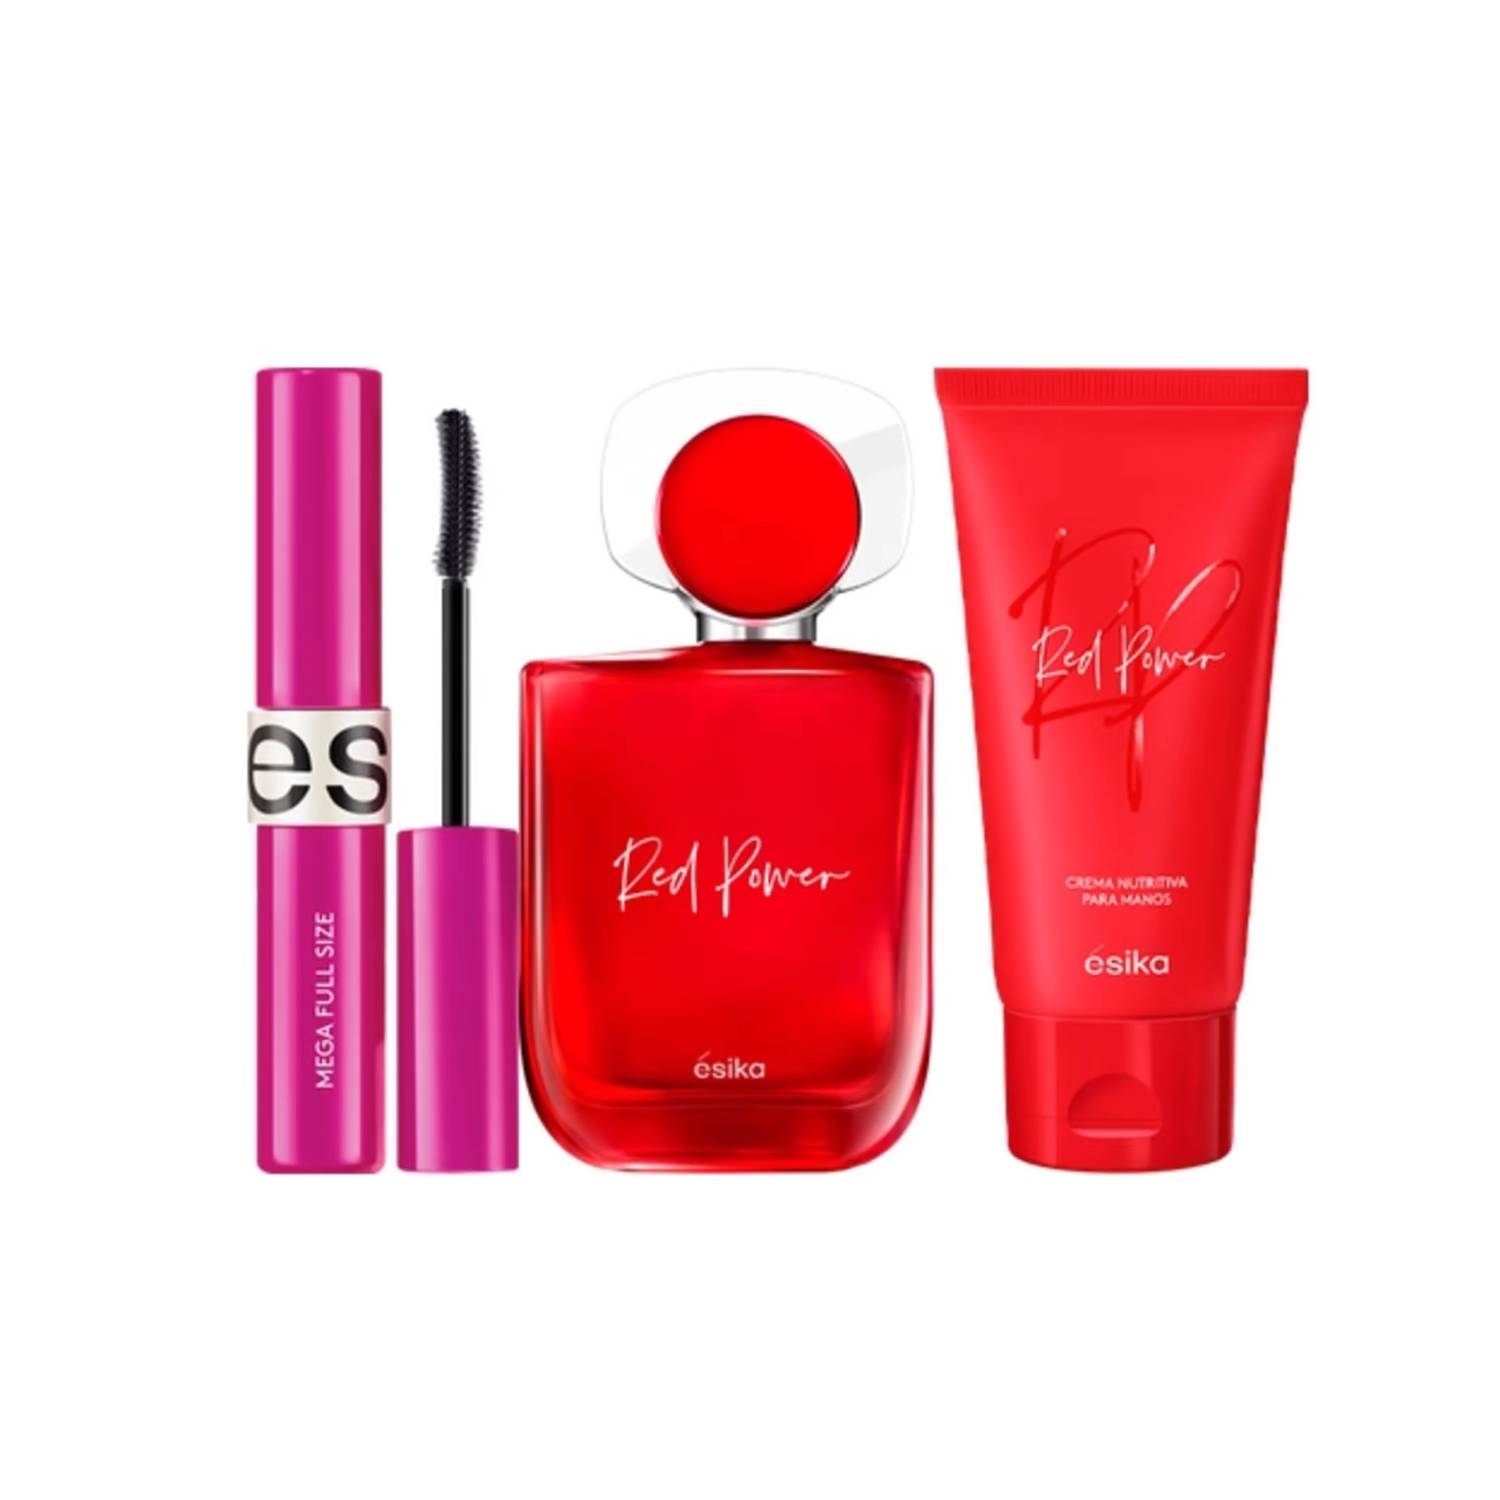 Red Power Perfume de Mujer, 50 ml